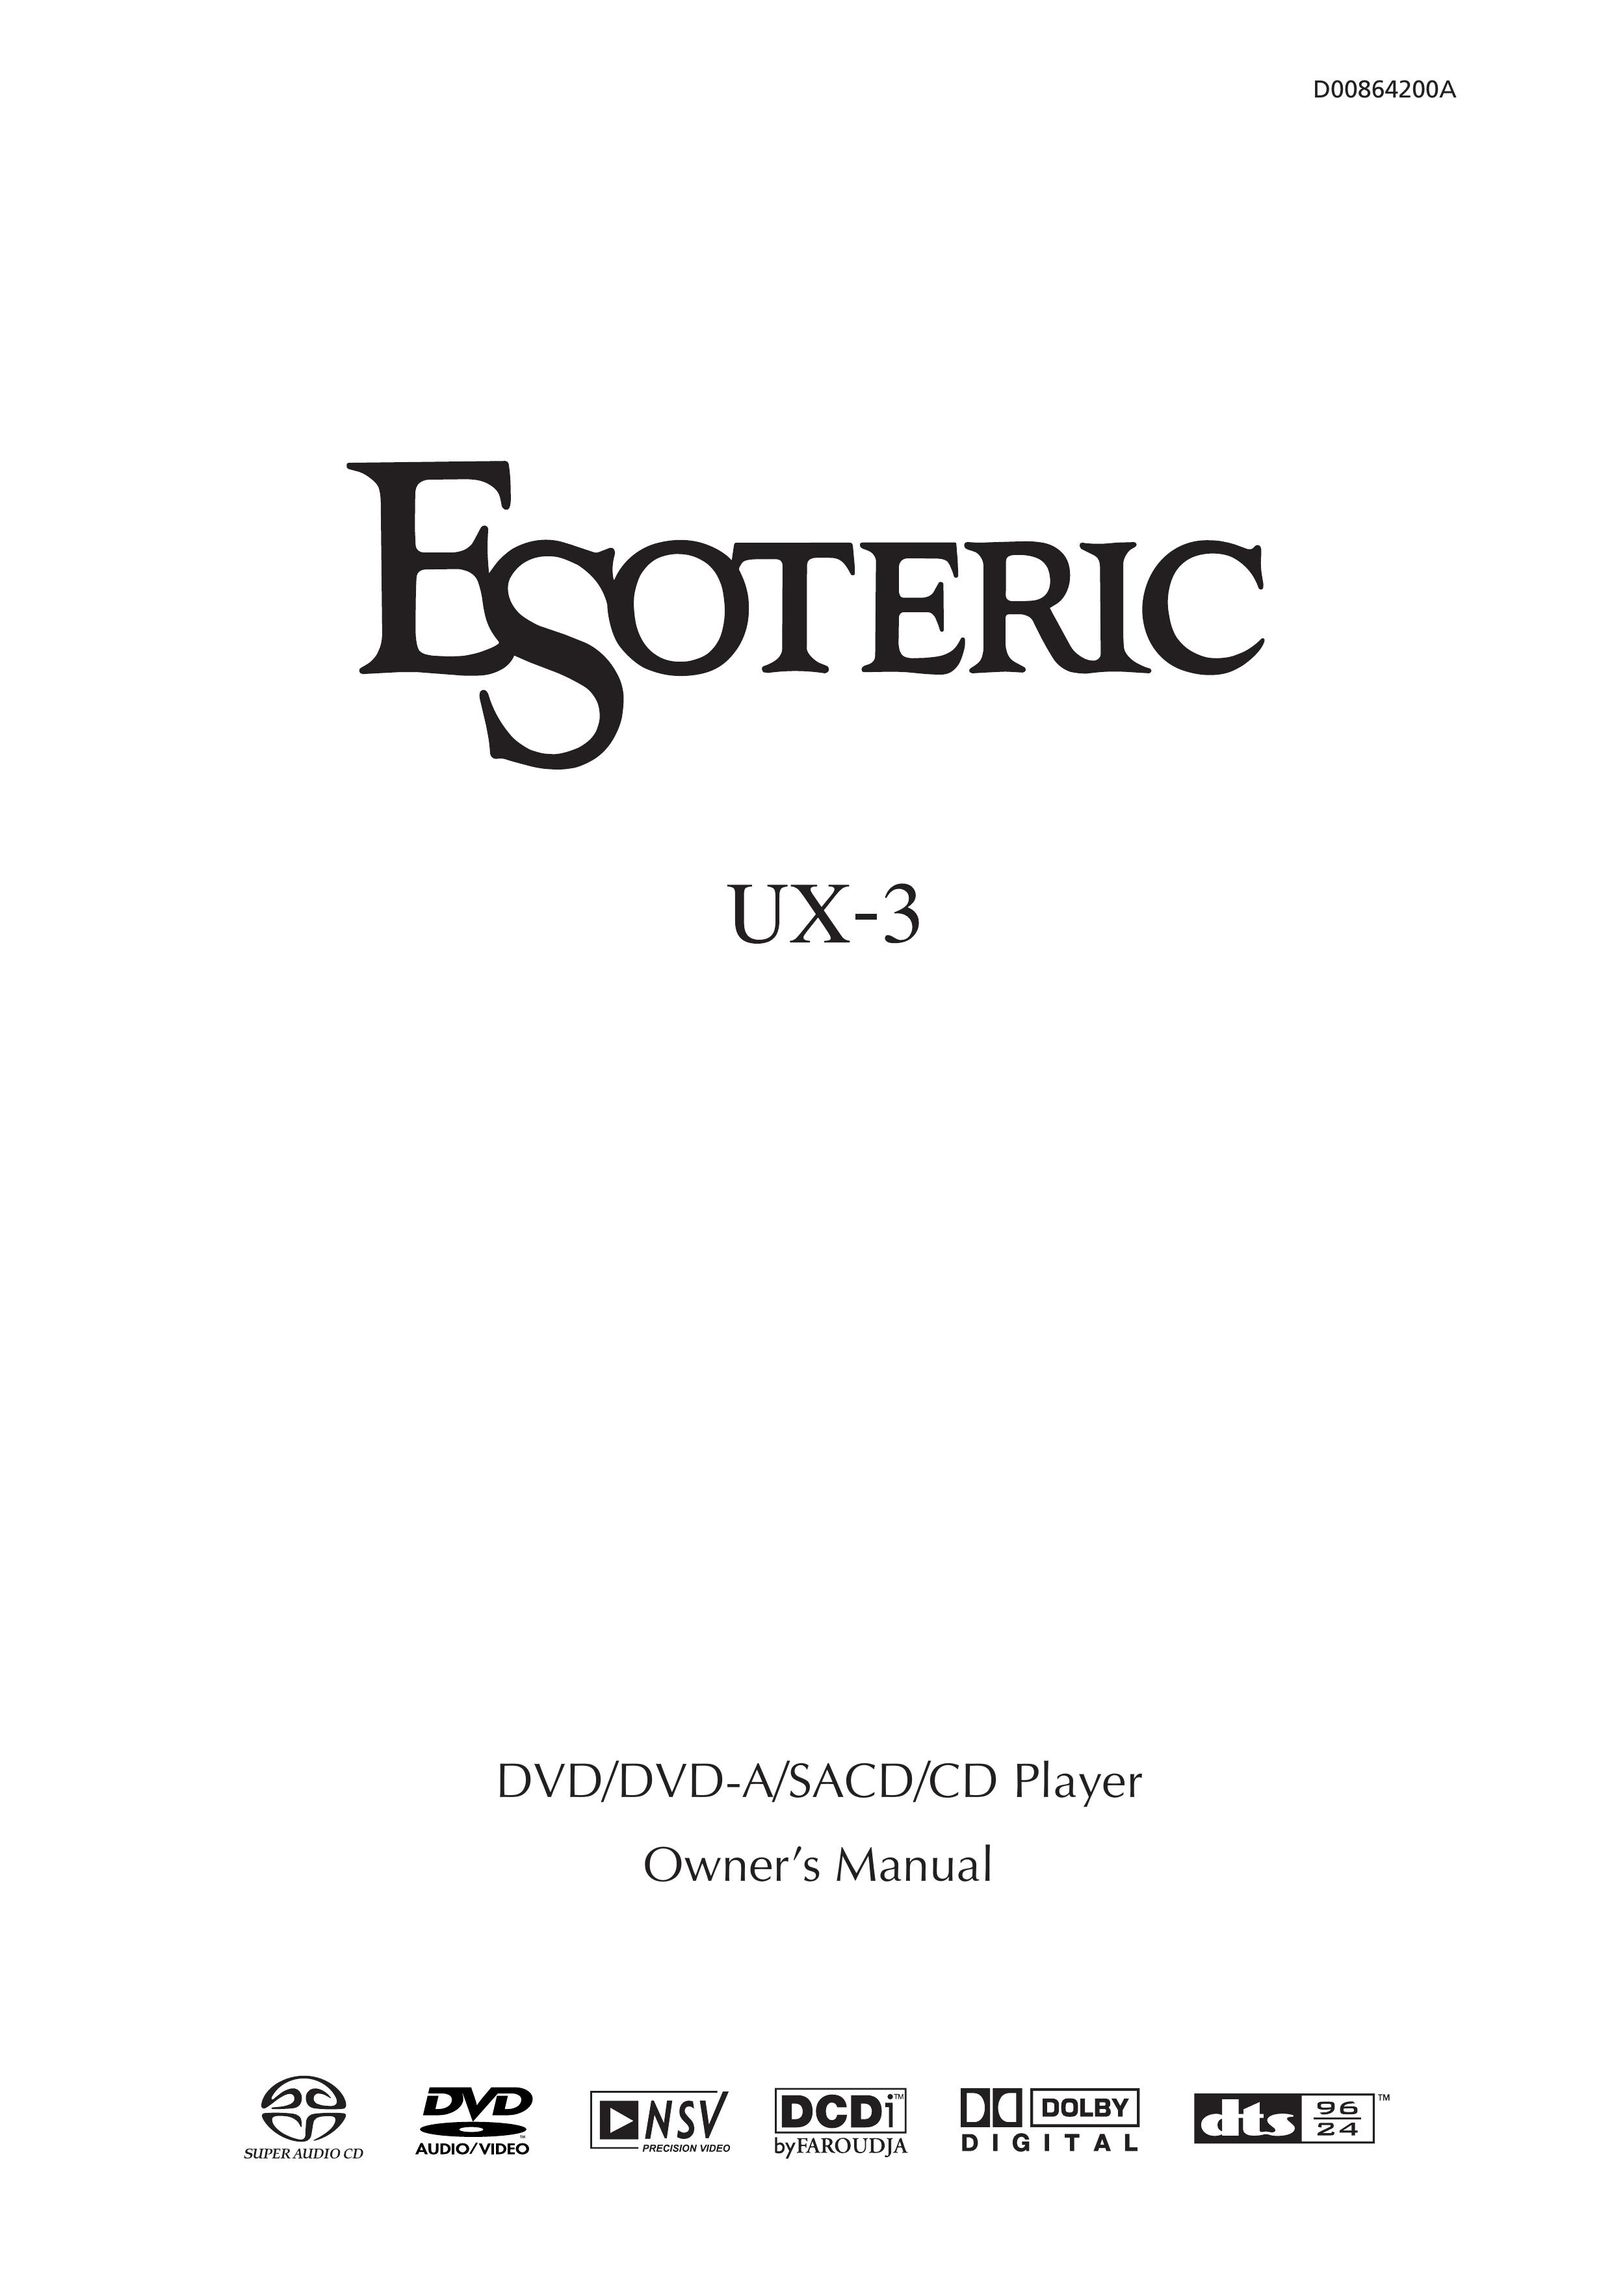 Esoteric D00864200A DVD Player User Manual